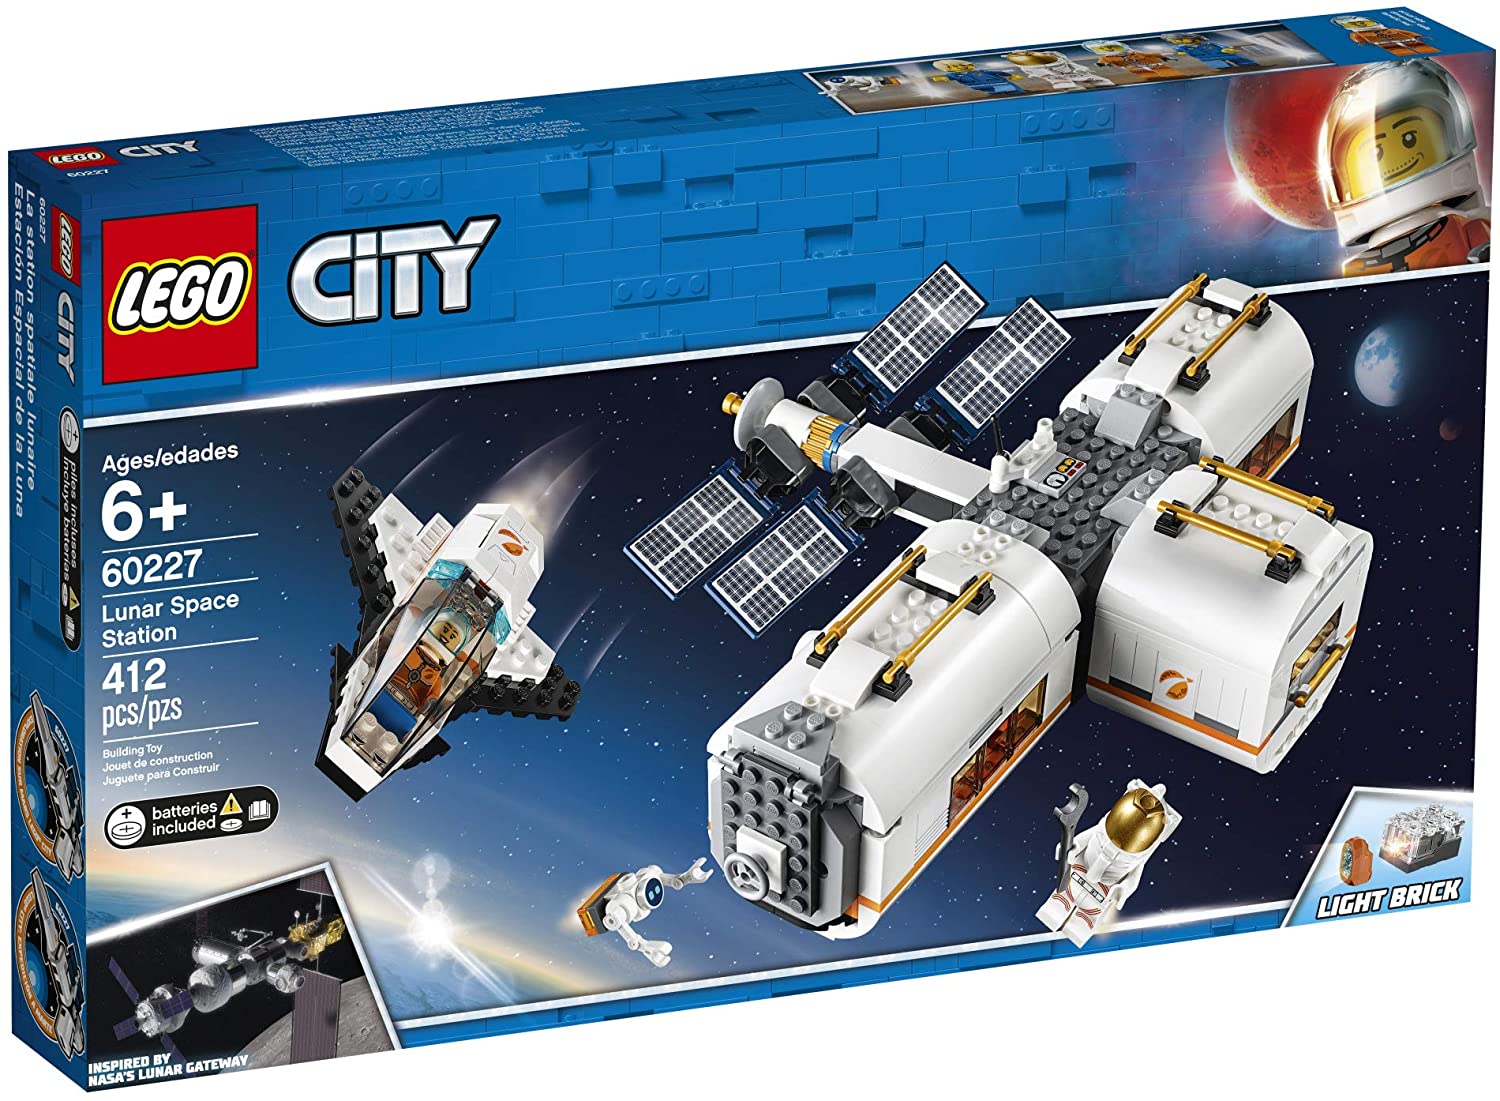 LEGO® CITY 60227 Lunar Space Station (412 pieces) – AESOP'S FABLE